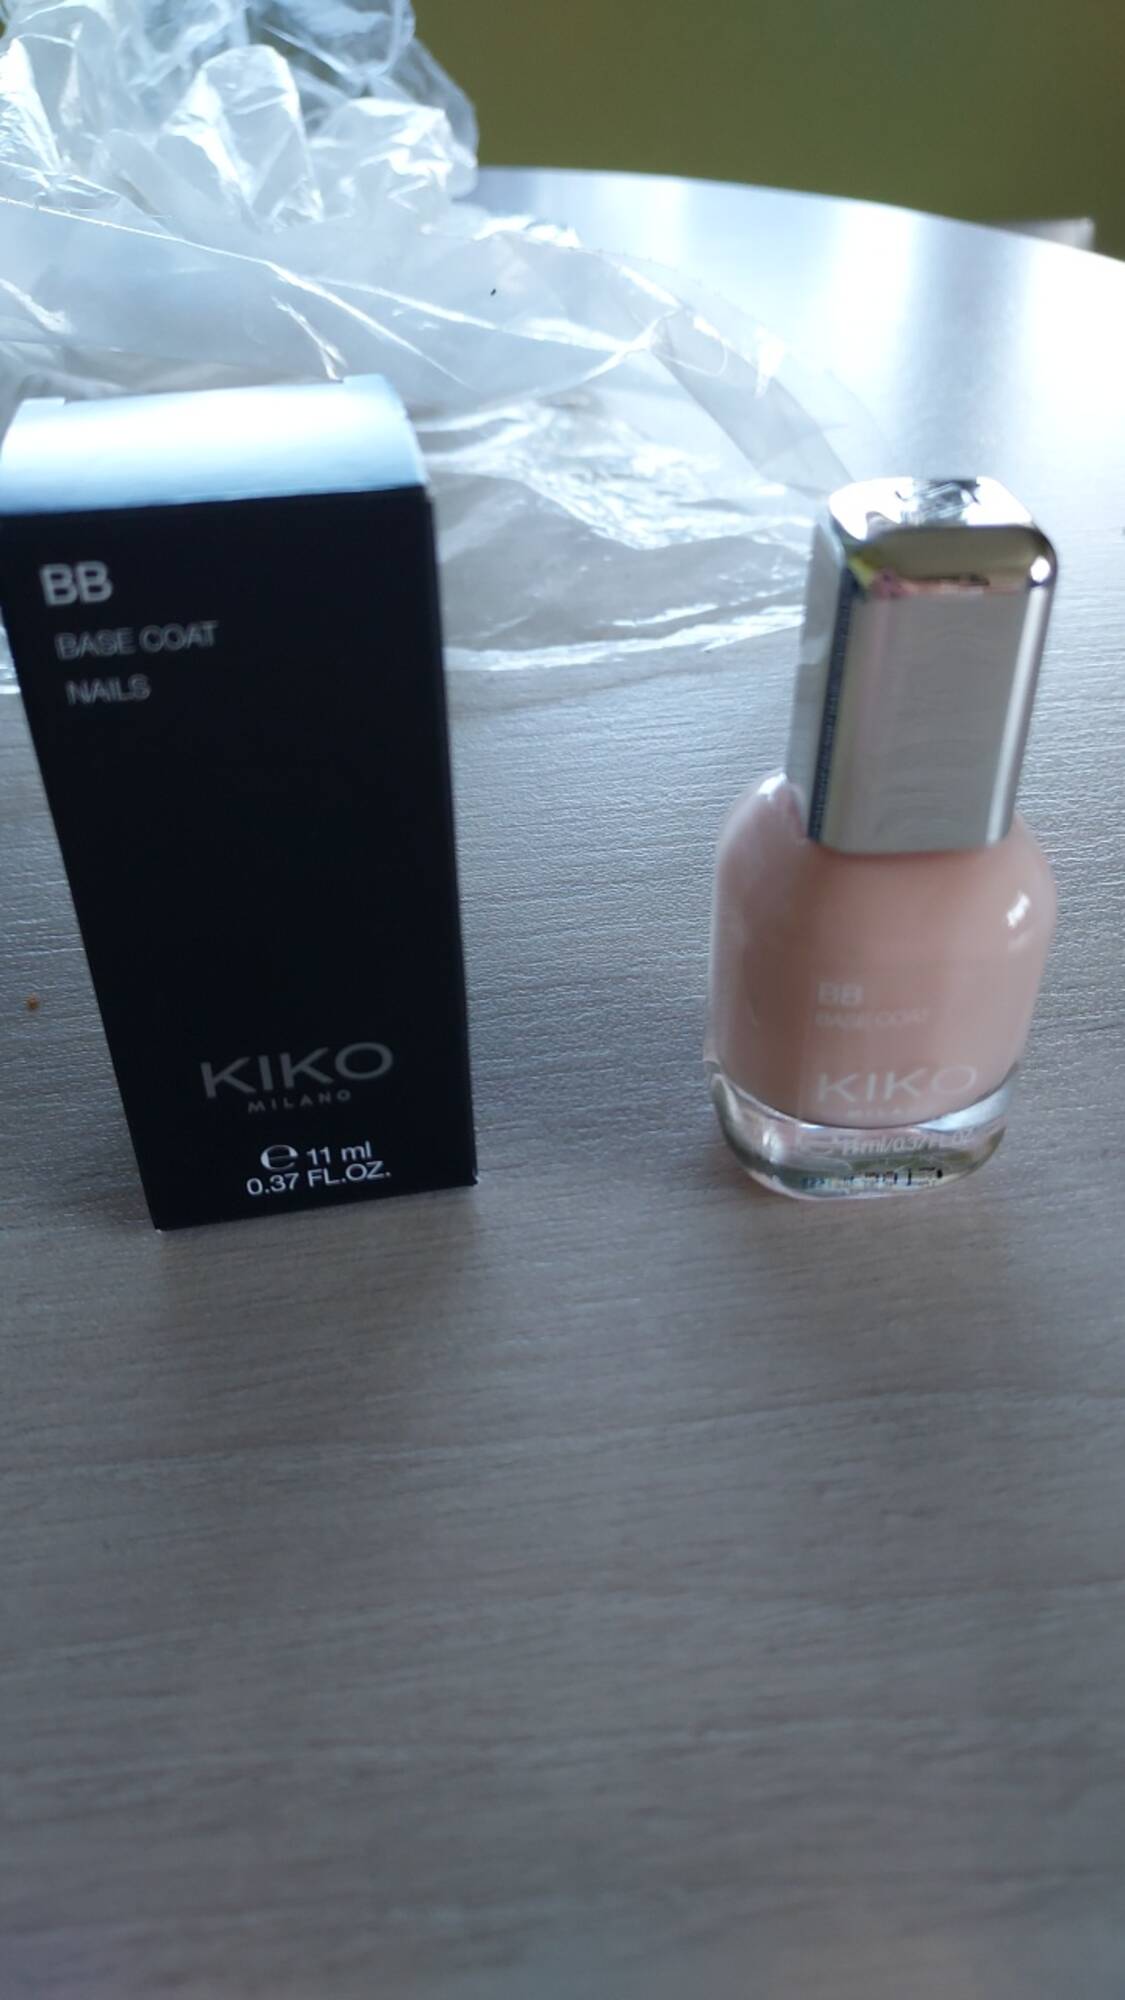 KIKO - BB Base coat nails